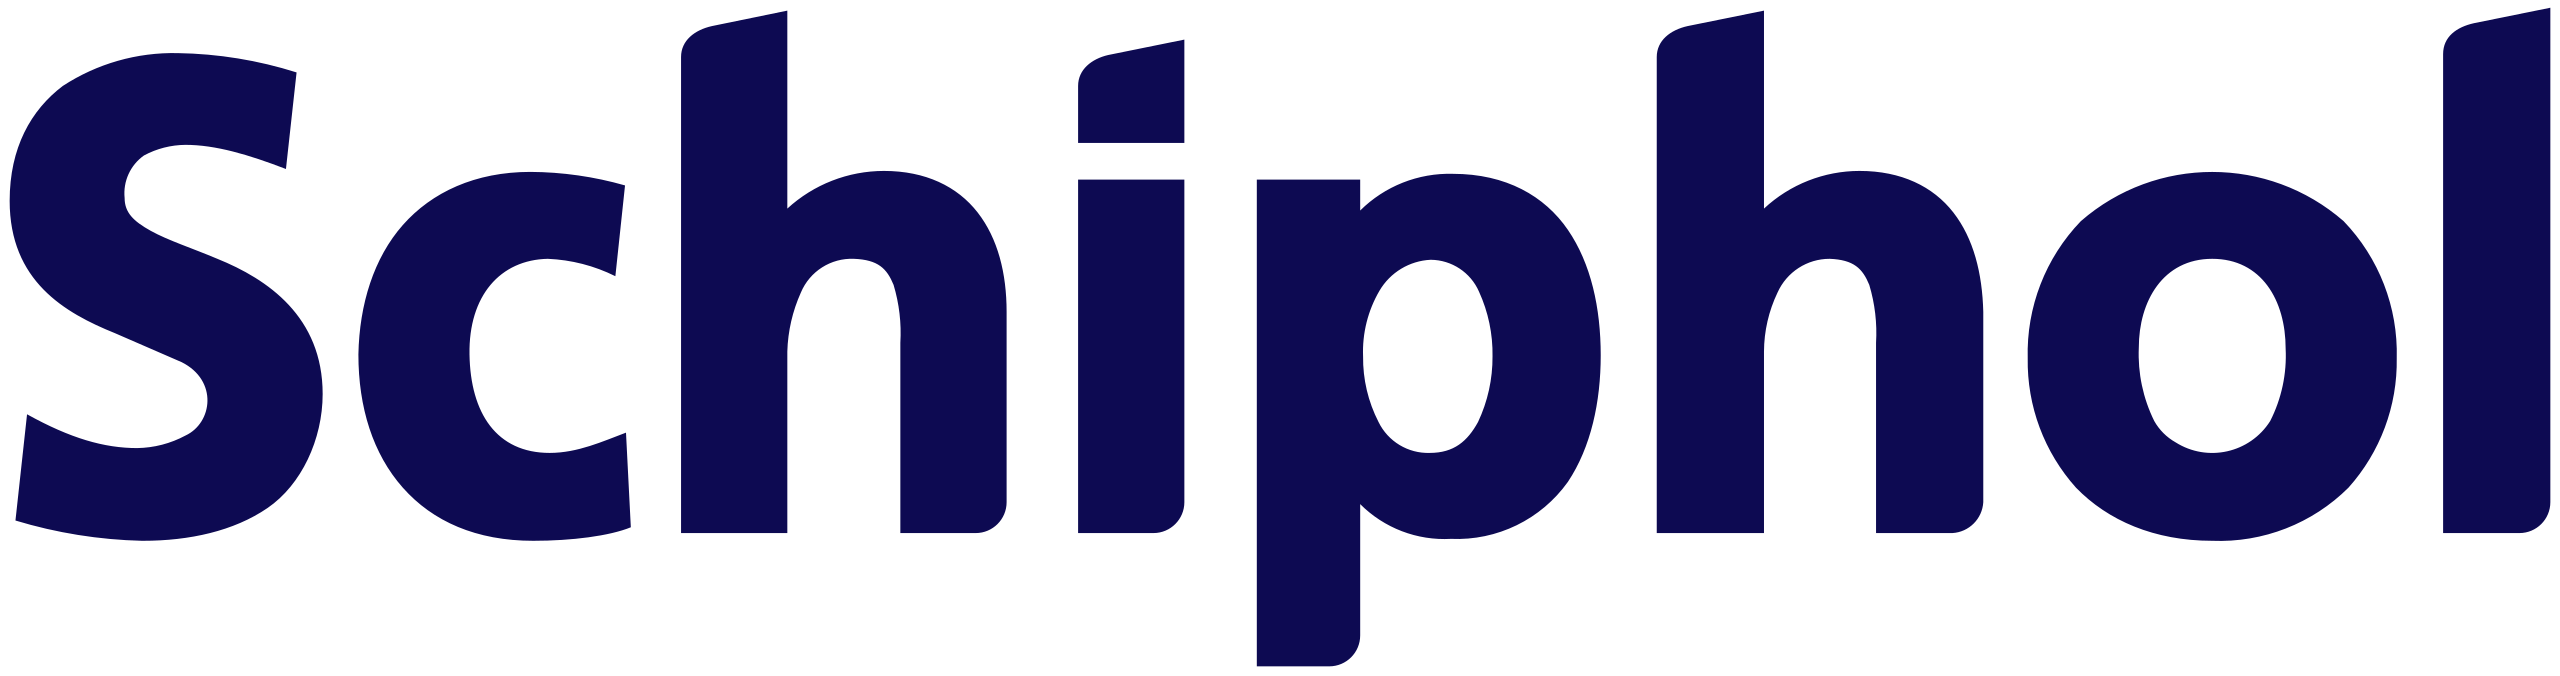 Schiphol Brand Logo